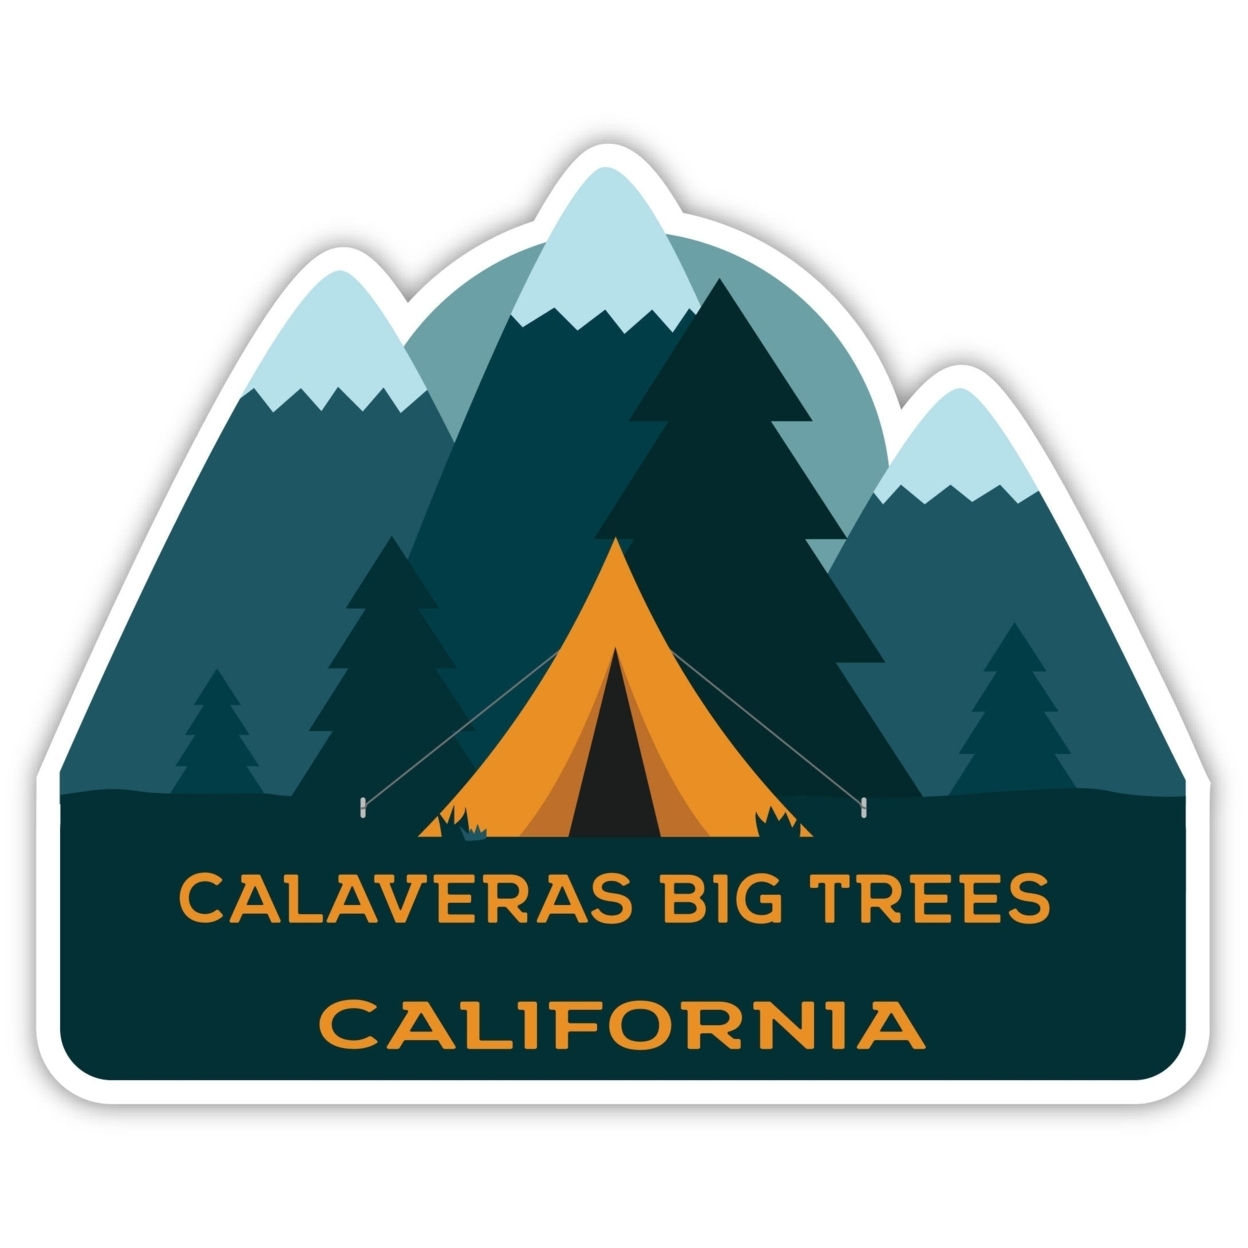 Calaveras Big Trees California Souvenir Decorative Stickers (Choose Theme And Size) - 4-Pack, 10-Inch, Camp Life